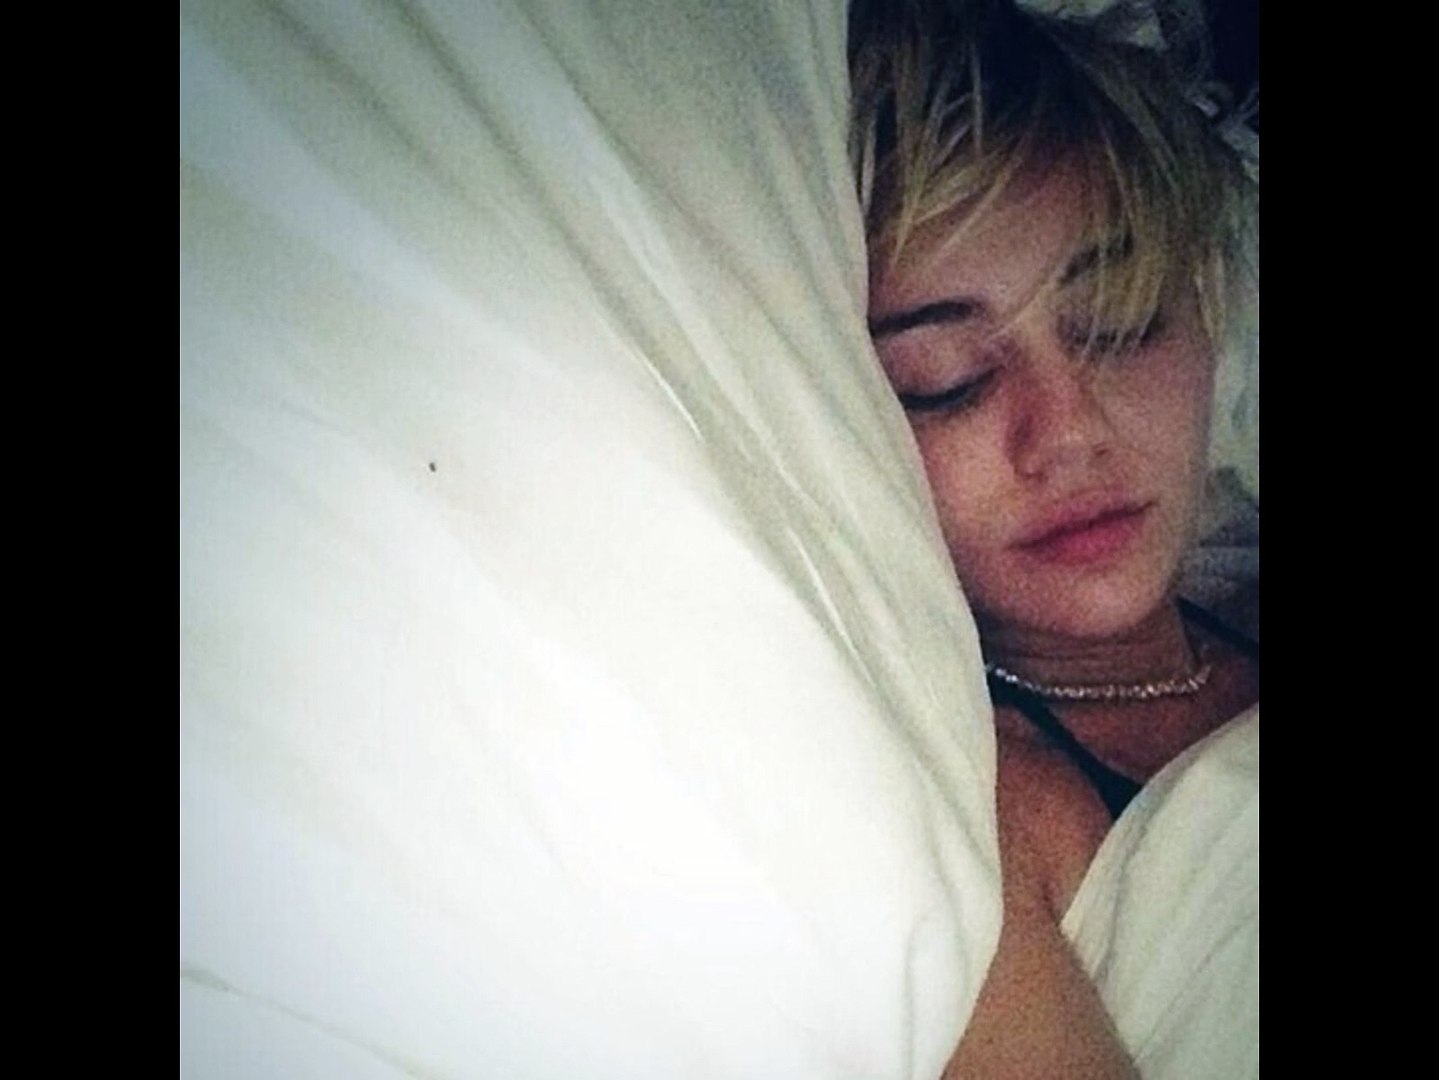 Miley Cyrus Without Makeup Photos - Videos